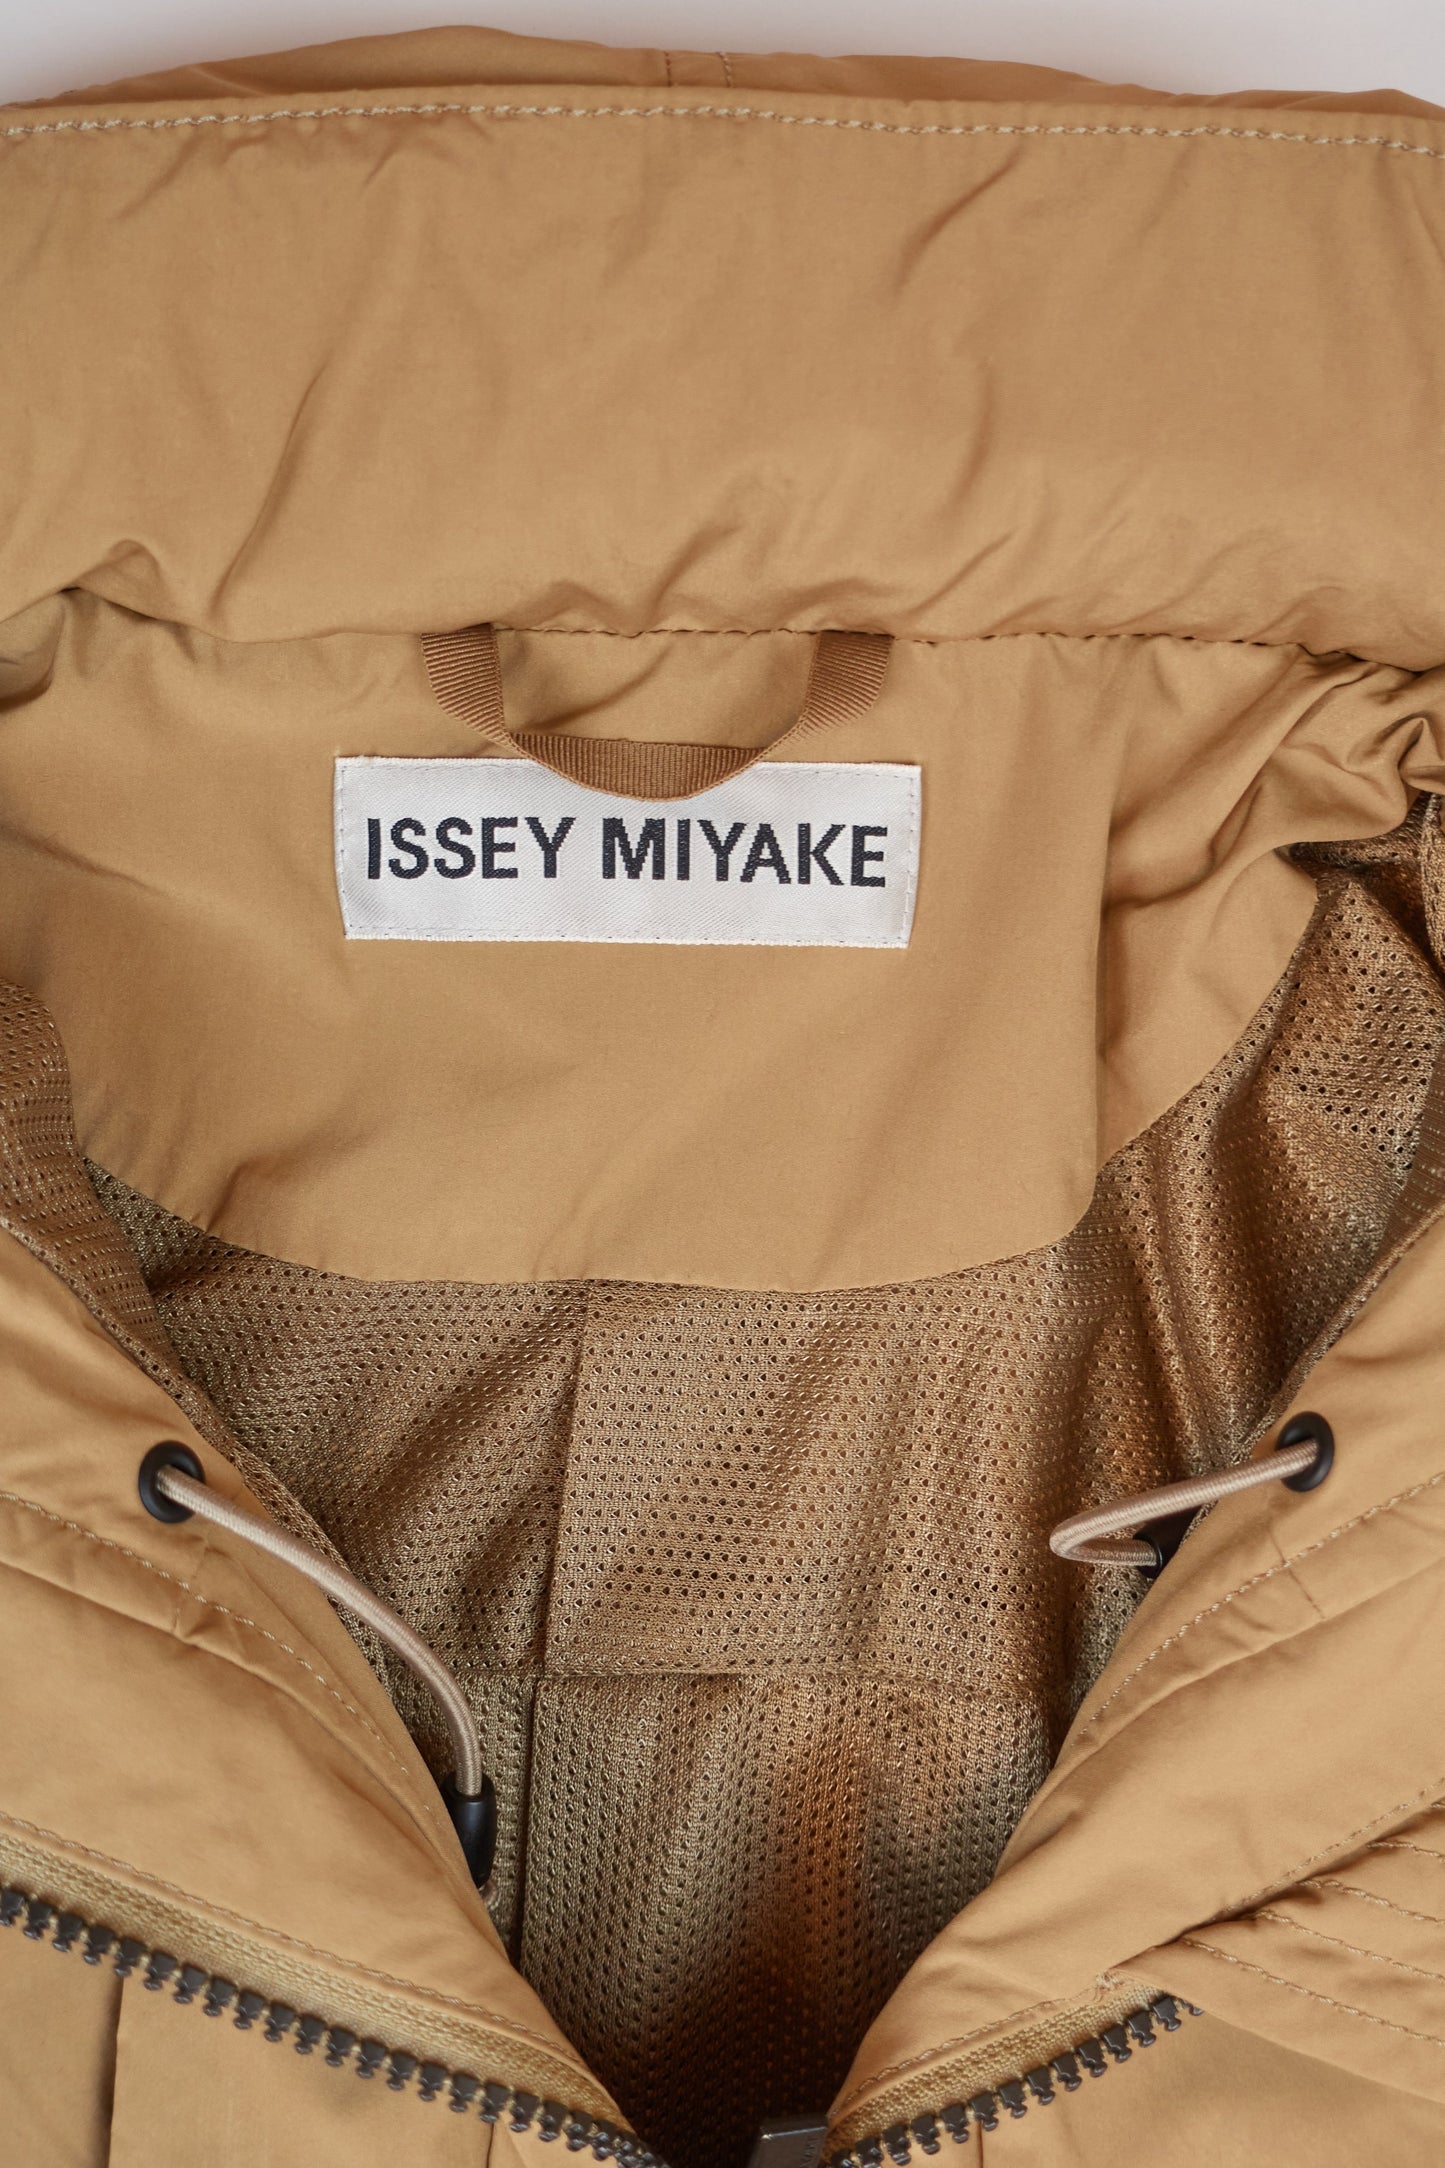 Issey Miyake hooded raincoat with full length zips